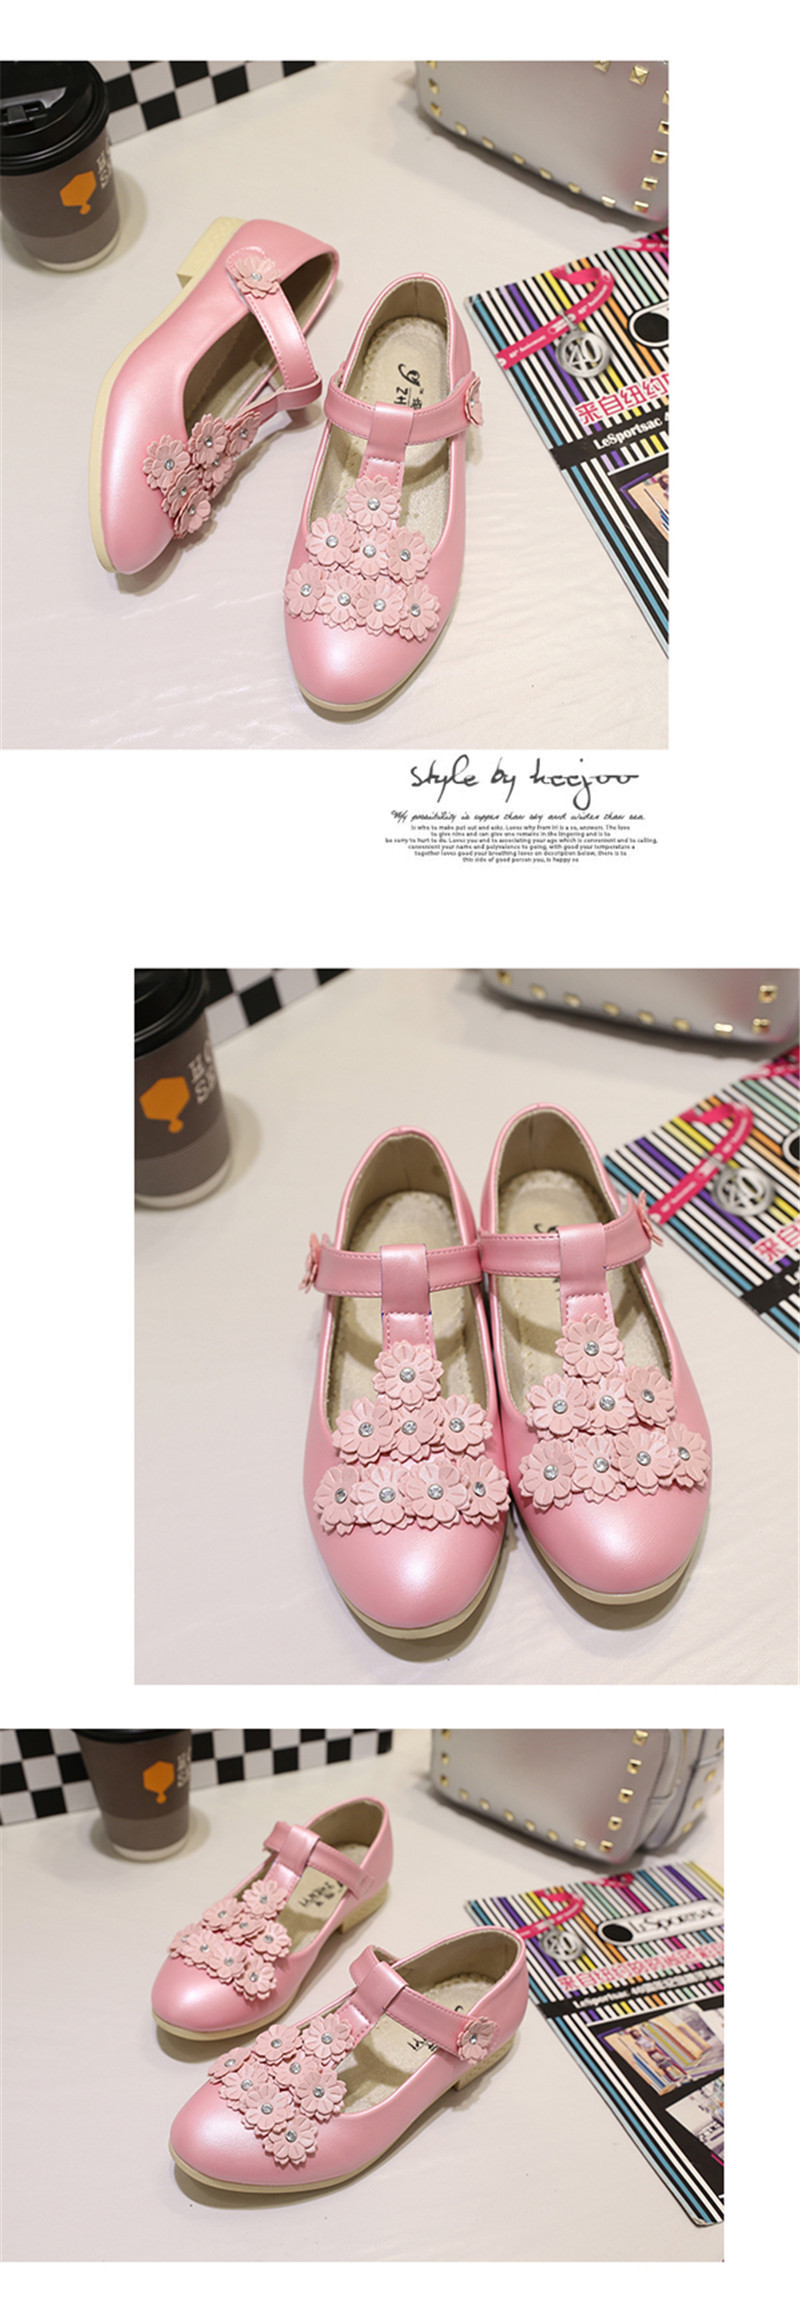 Girl Mini Melissa Rain Shoes For Baby Girl Sandals Shoes Flowers Patent Leather Sandalia Infantil Fashion Girl Shoes (8)